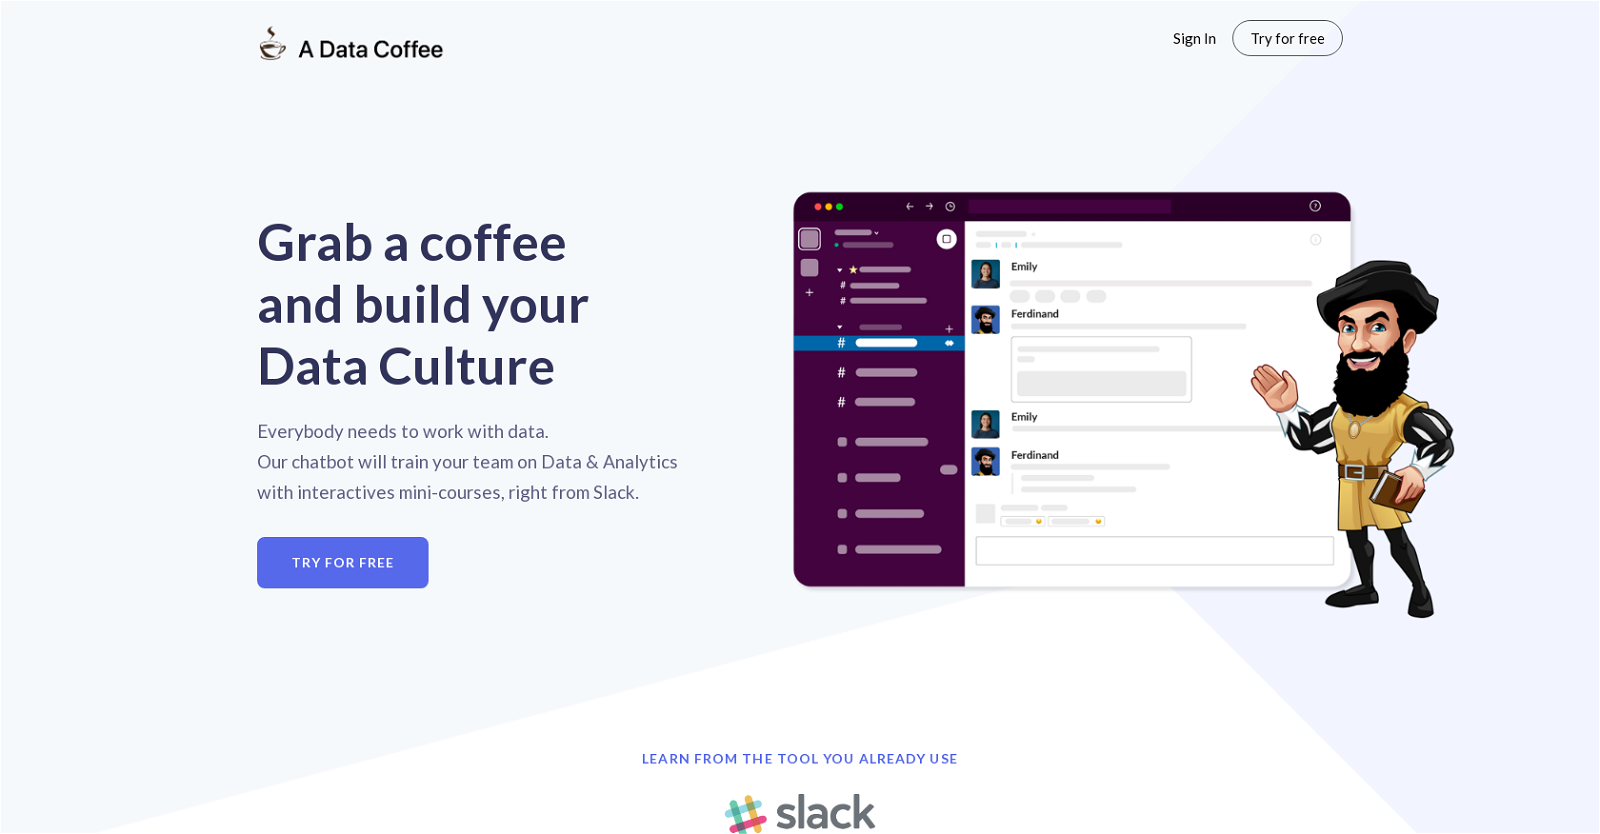 A Data Coffee website